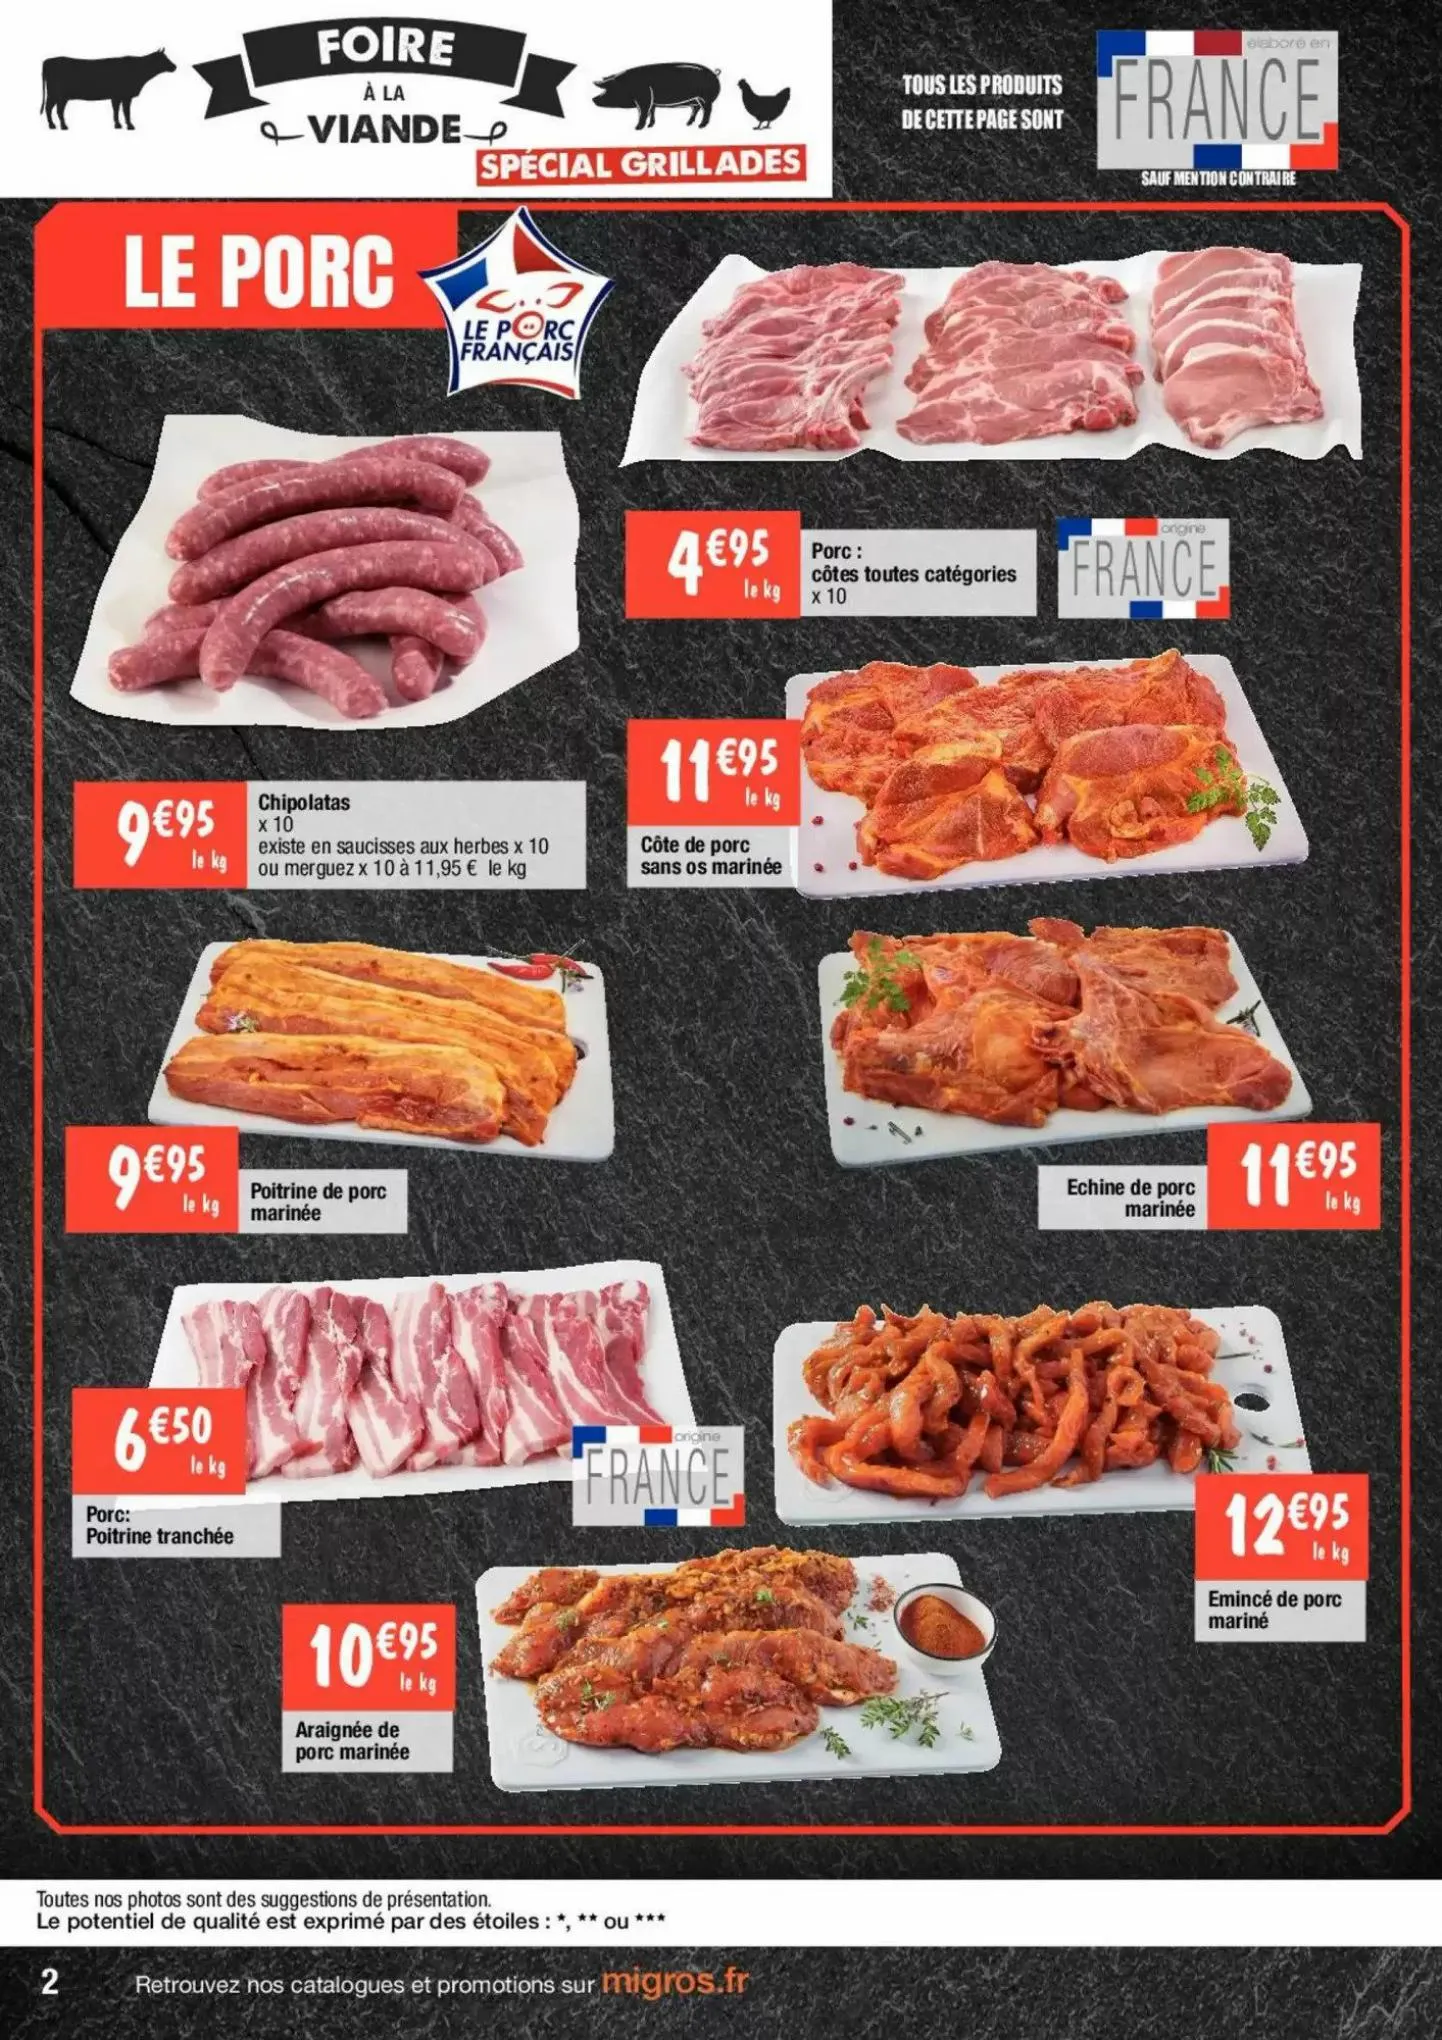 Catalogue Foire a la viande!, page 00002